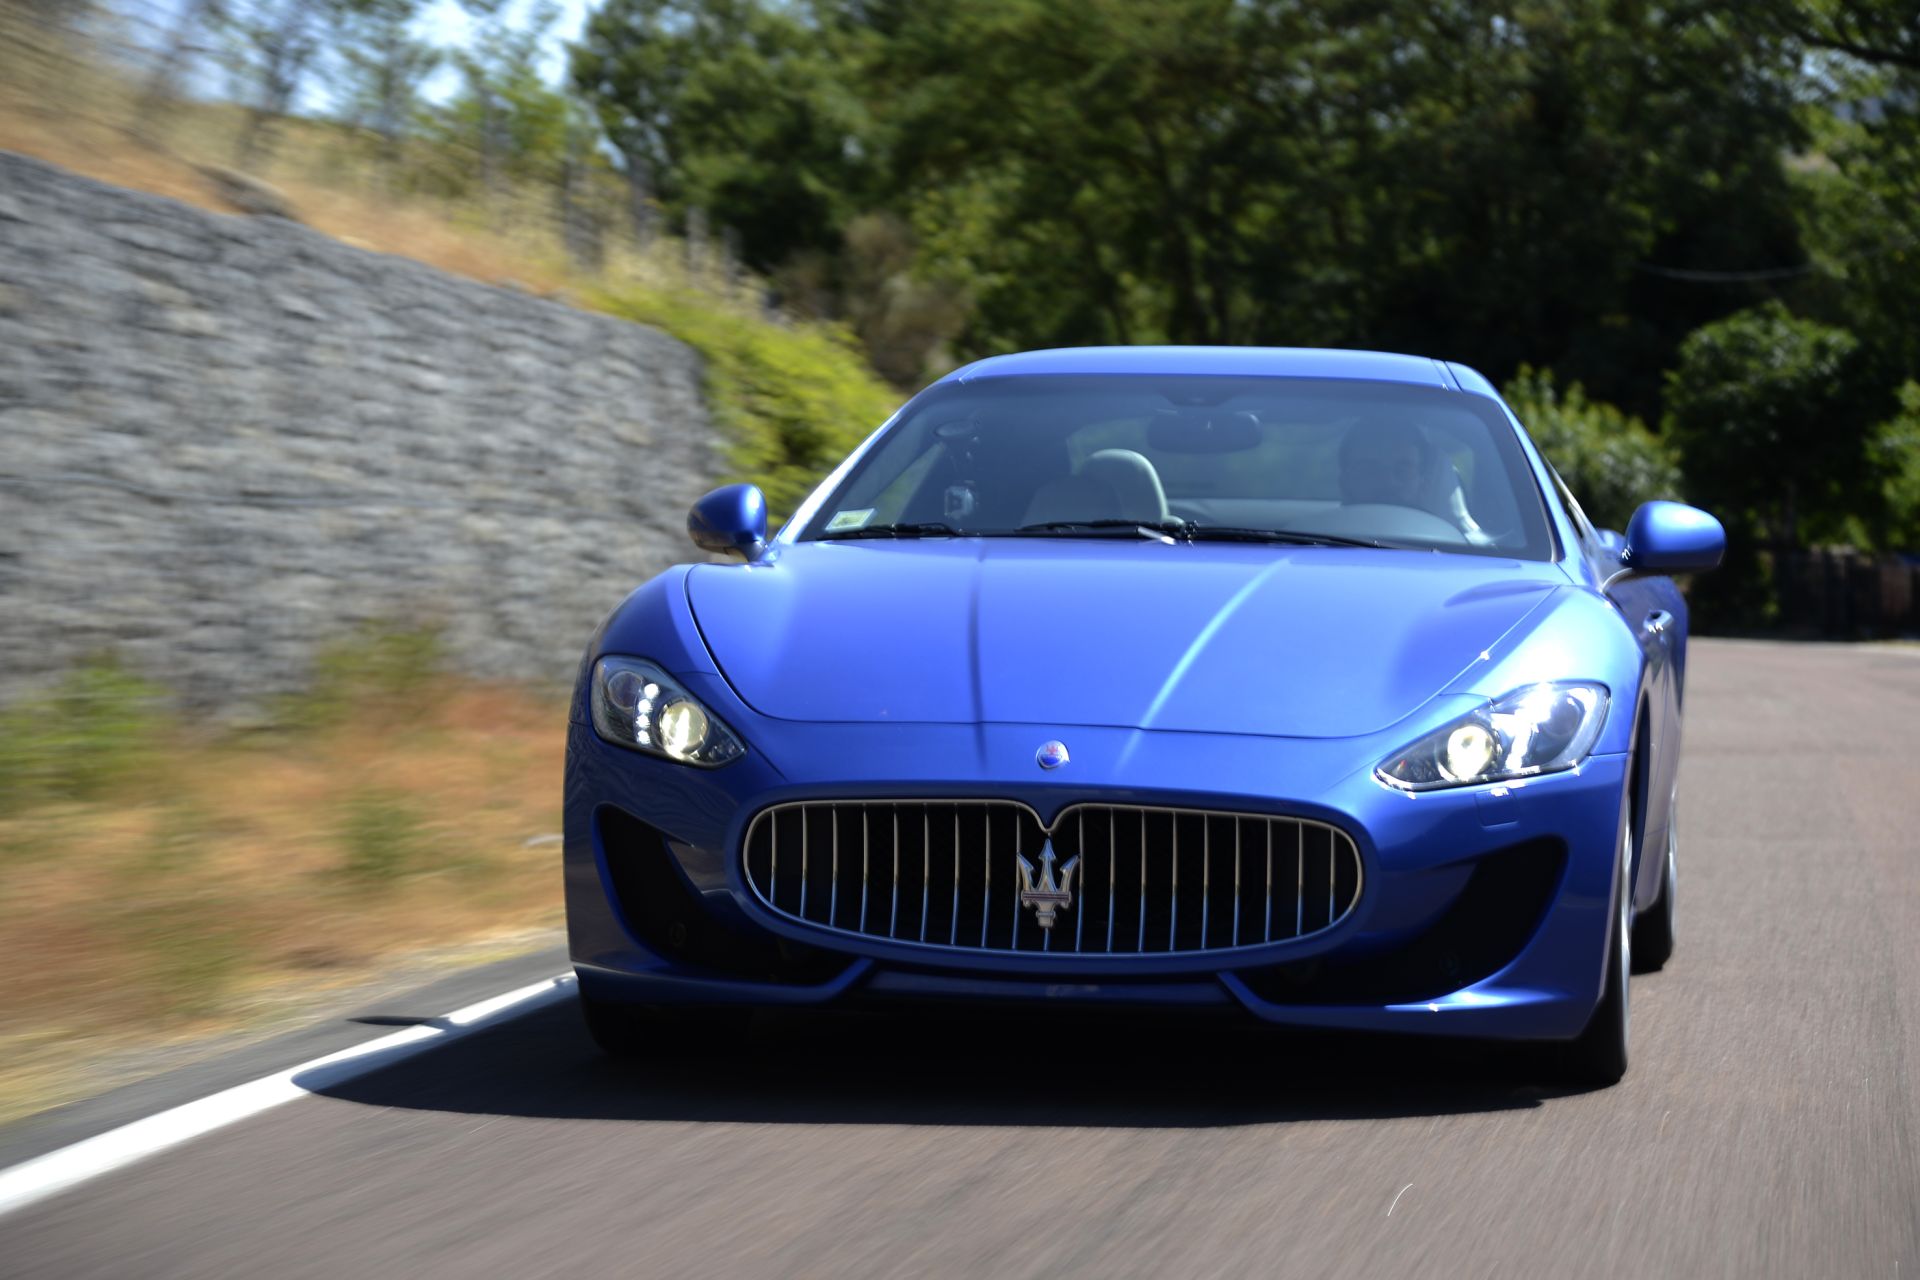  - Maserati-GranTurismo-Sport-TestDrive-Sergio-Lanfranchi-BlogMotori.com-59